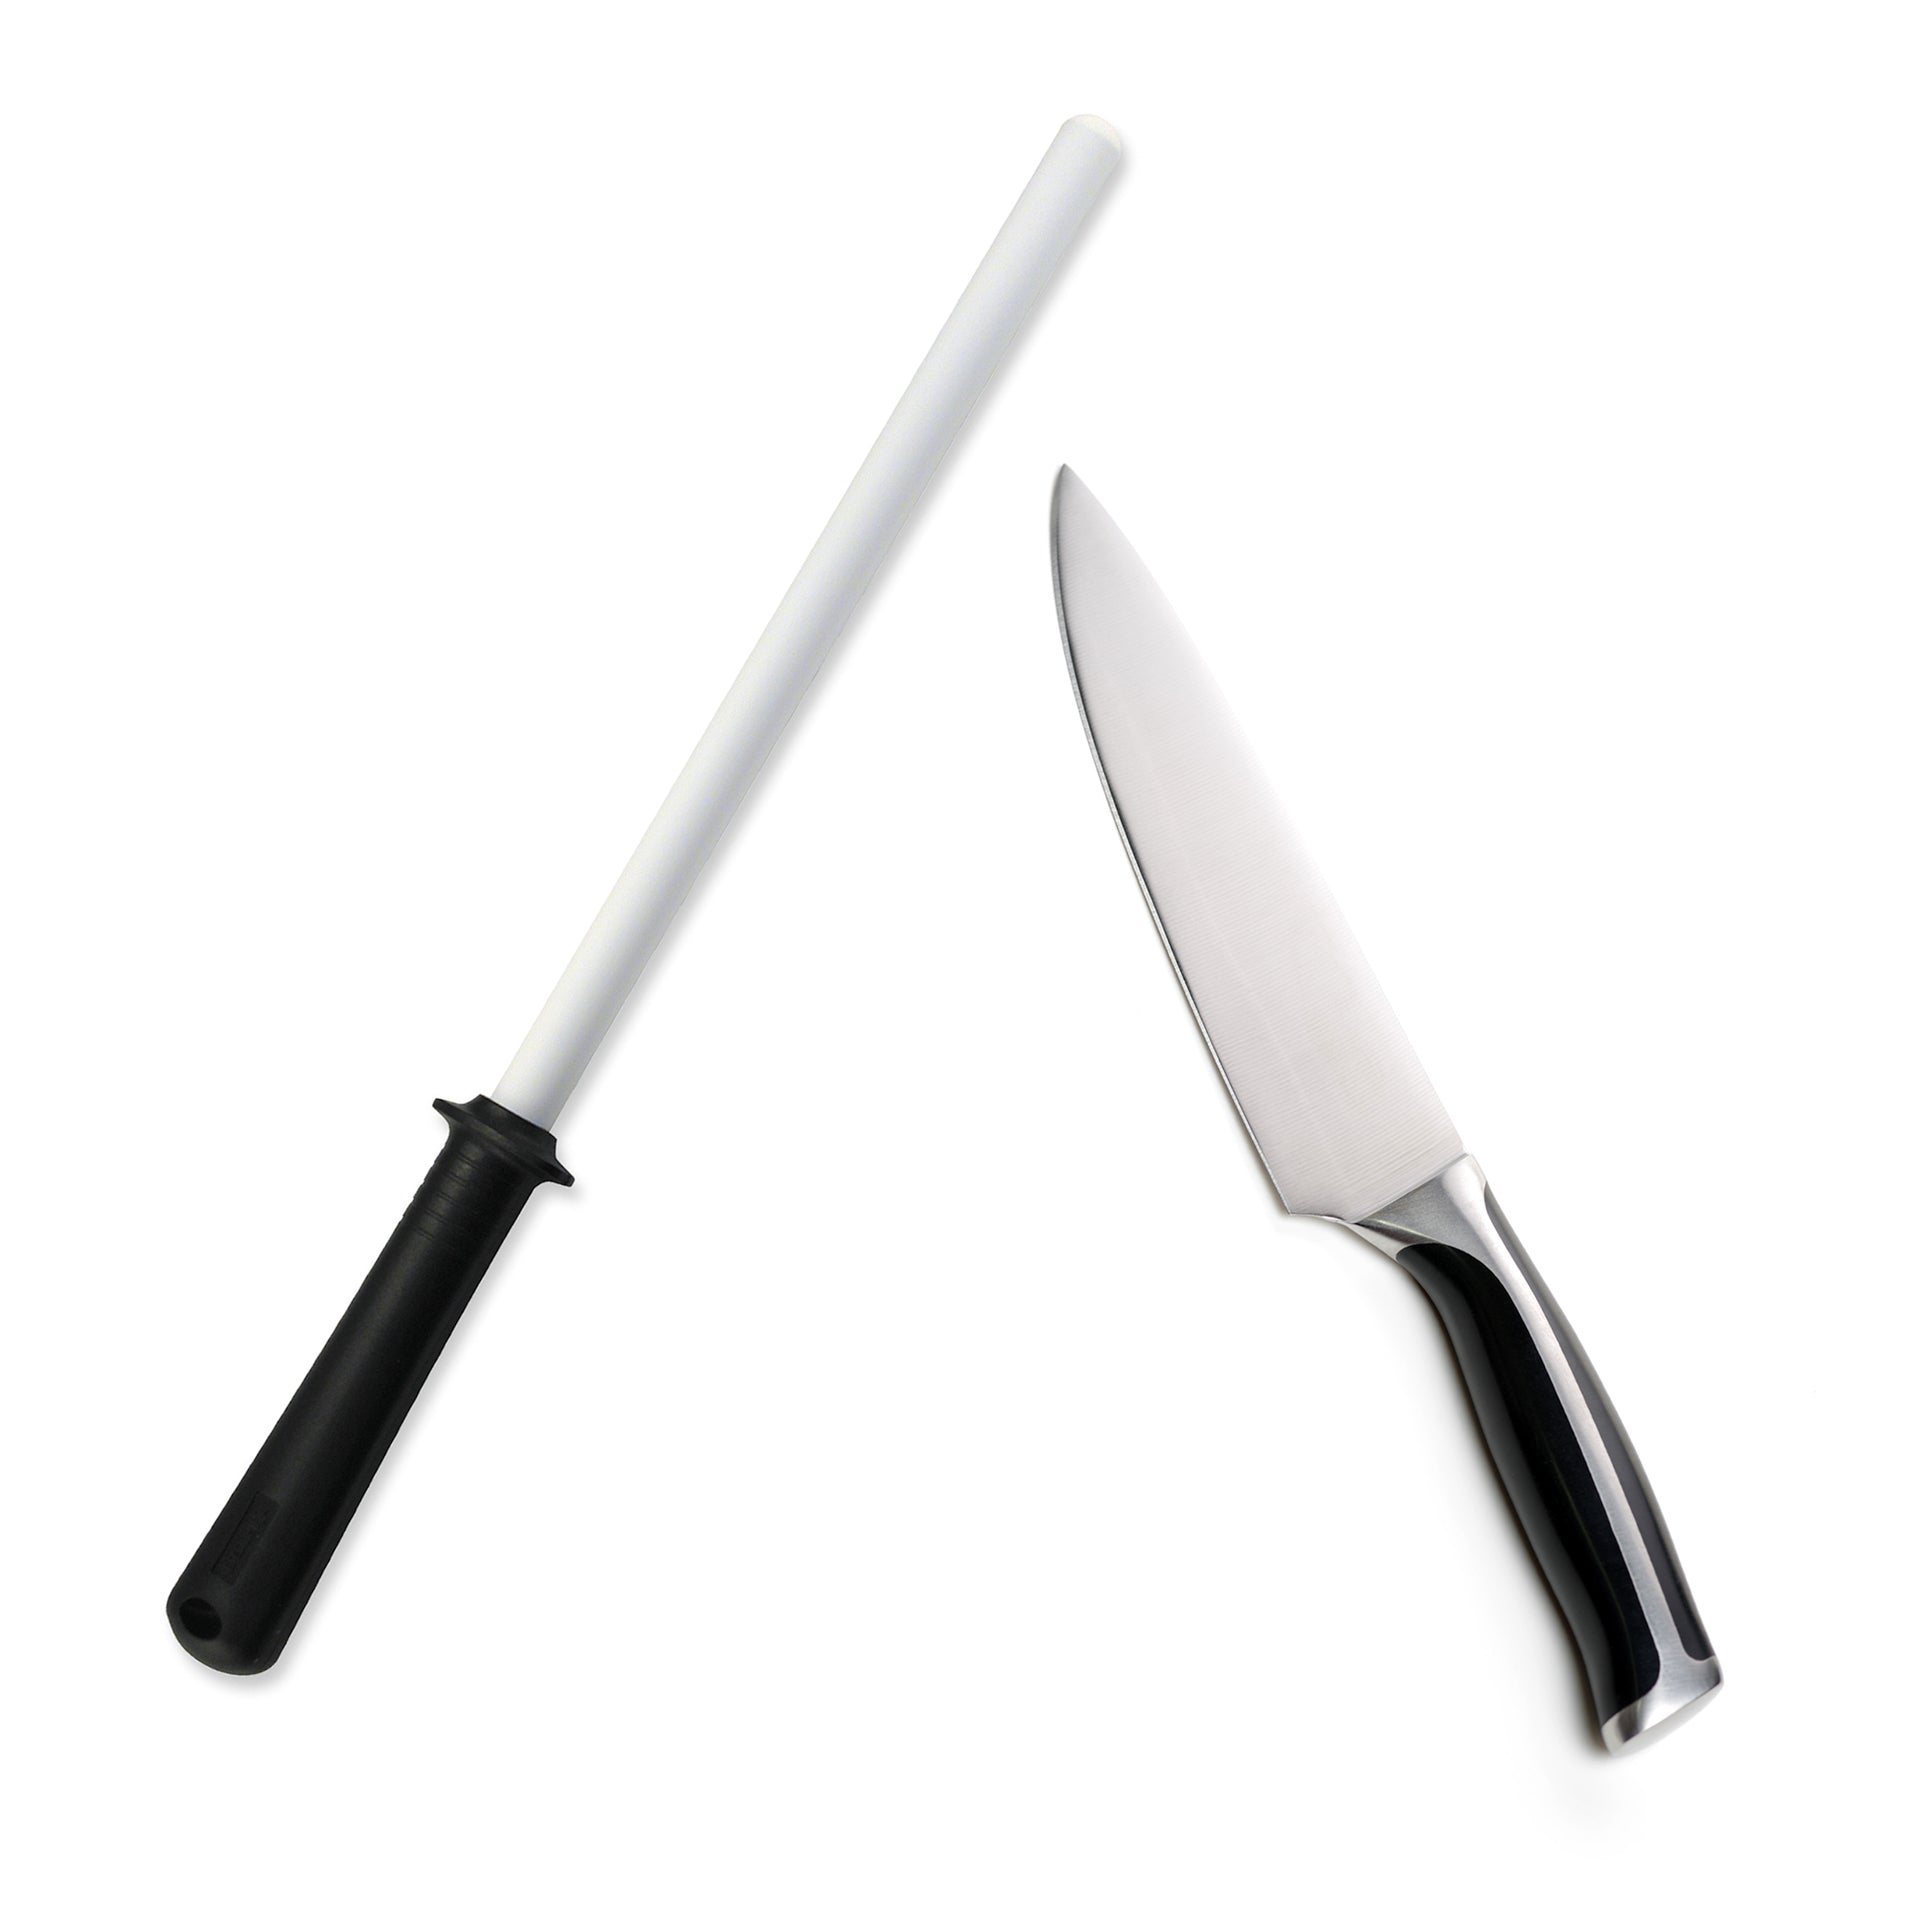 Kyocera Ceramic Knife Sharpener - My Ceramic Knives